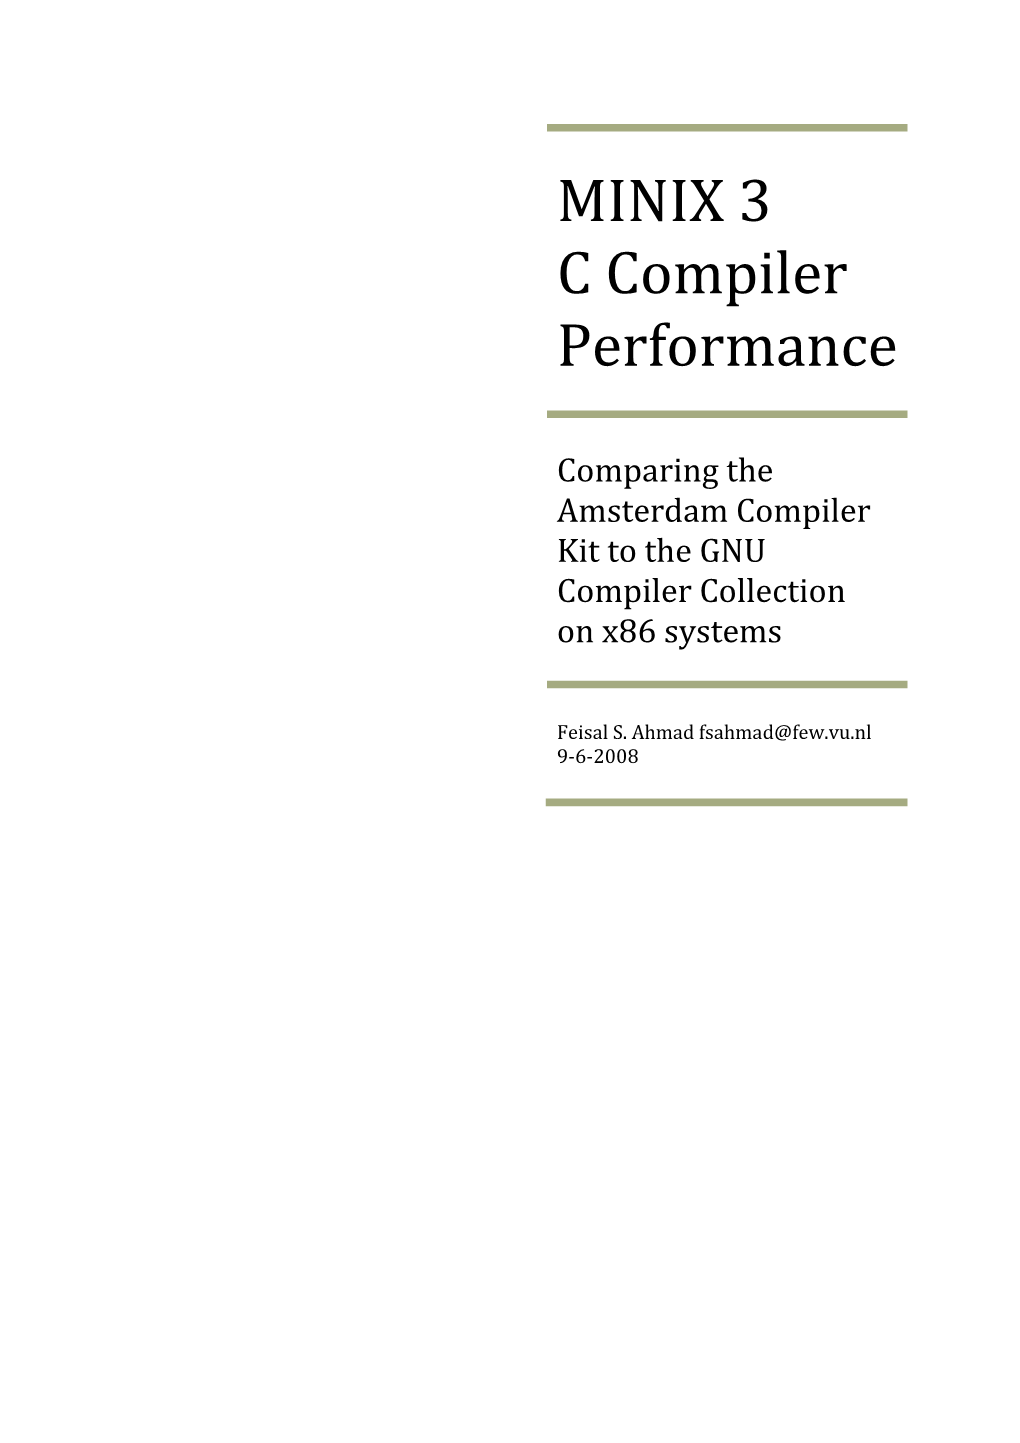 MINIX 3 C Compiler Performance